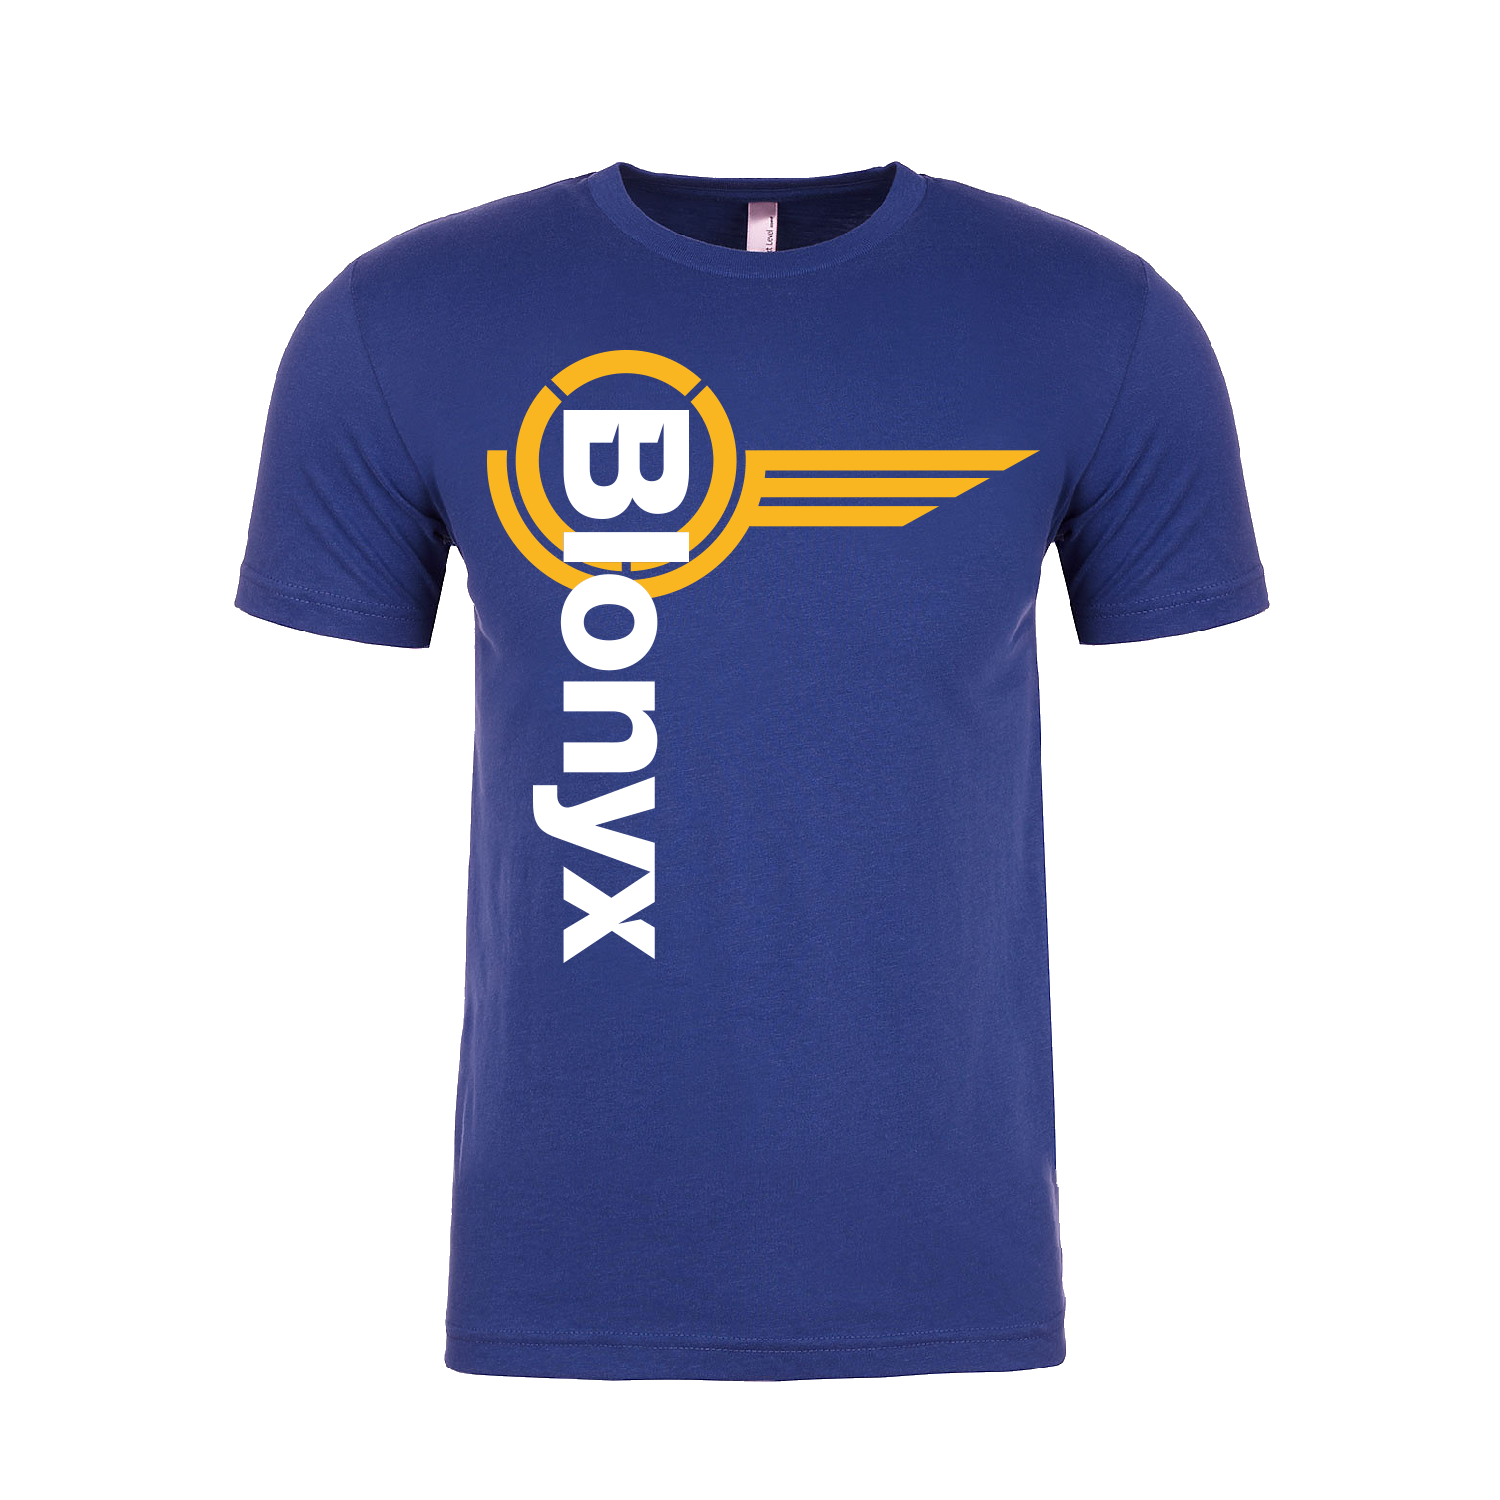 Blonyx S15 Men's Shirt